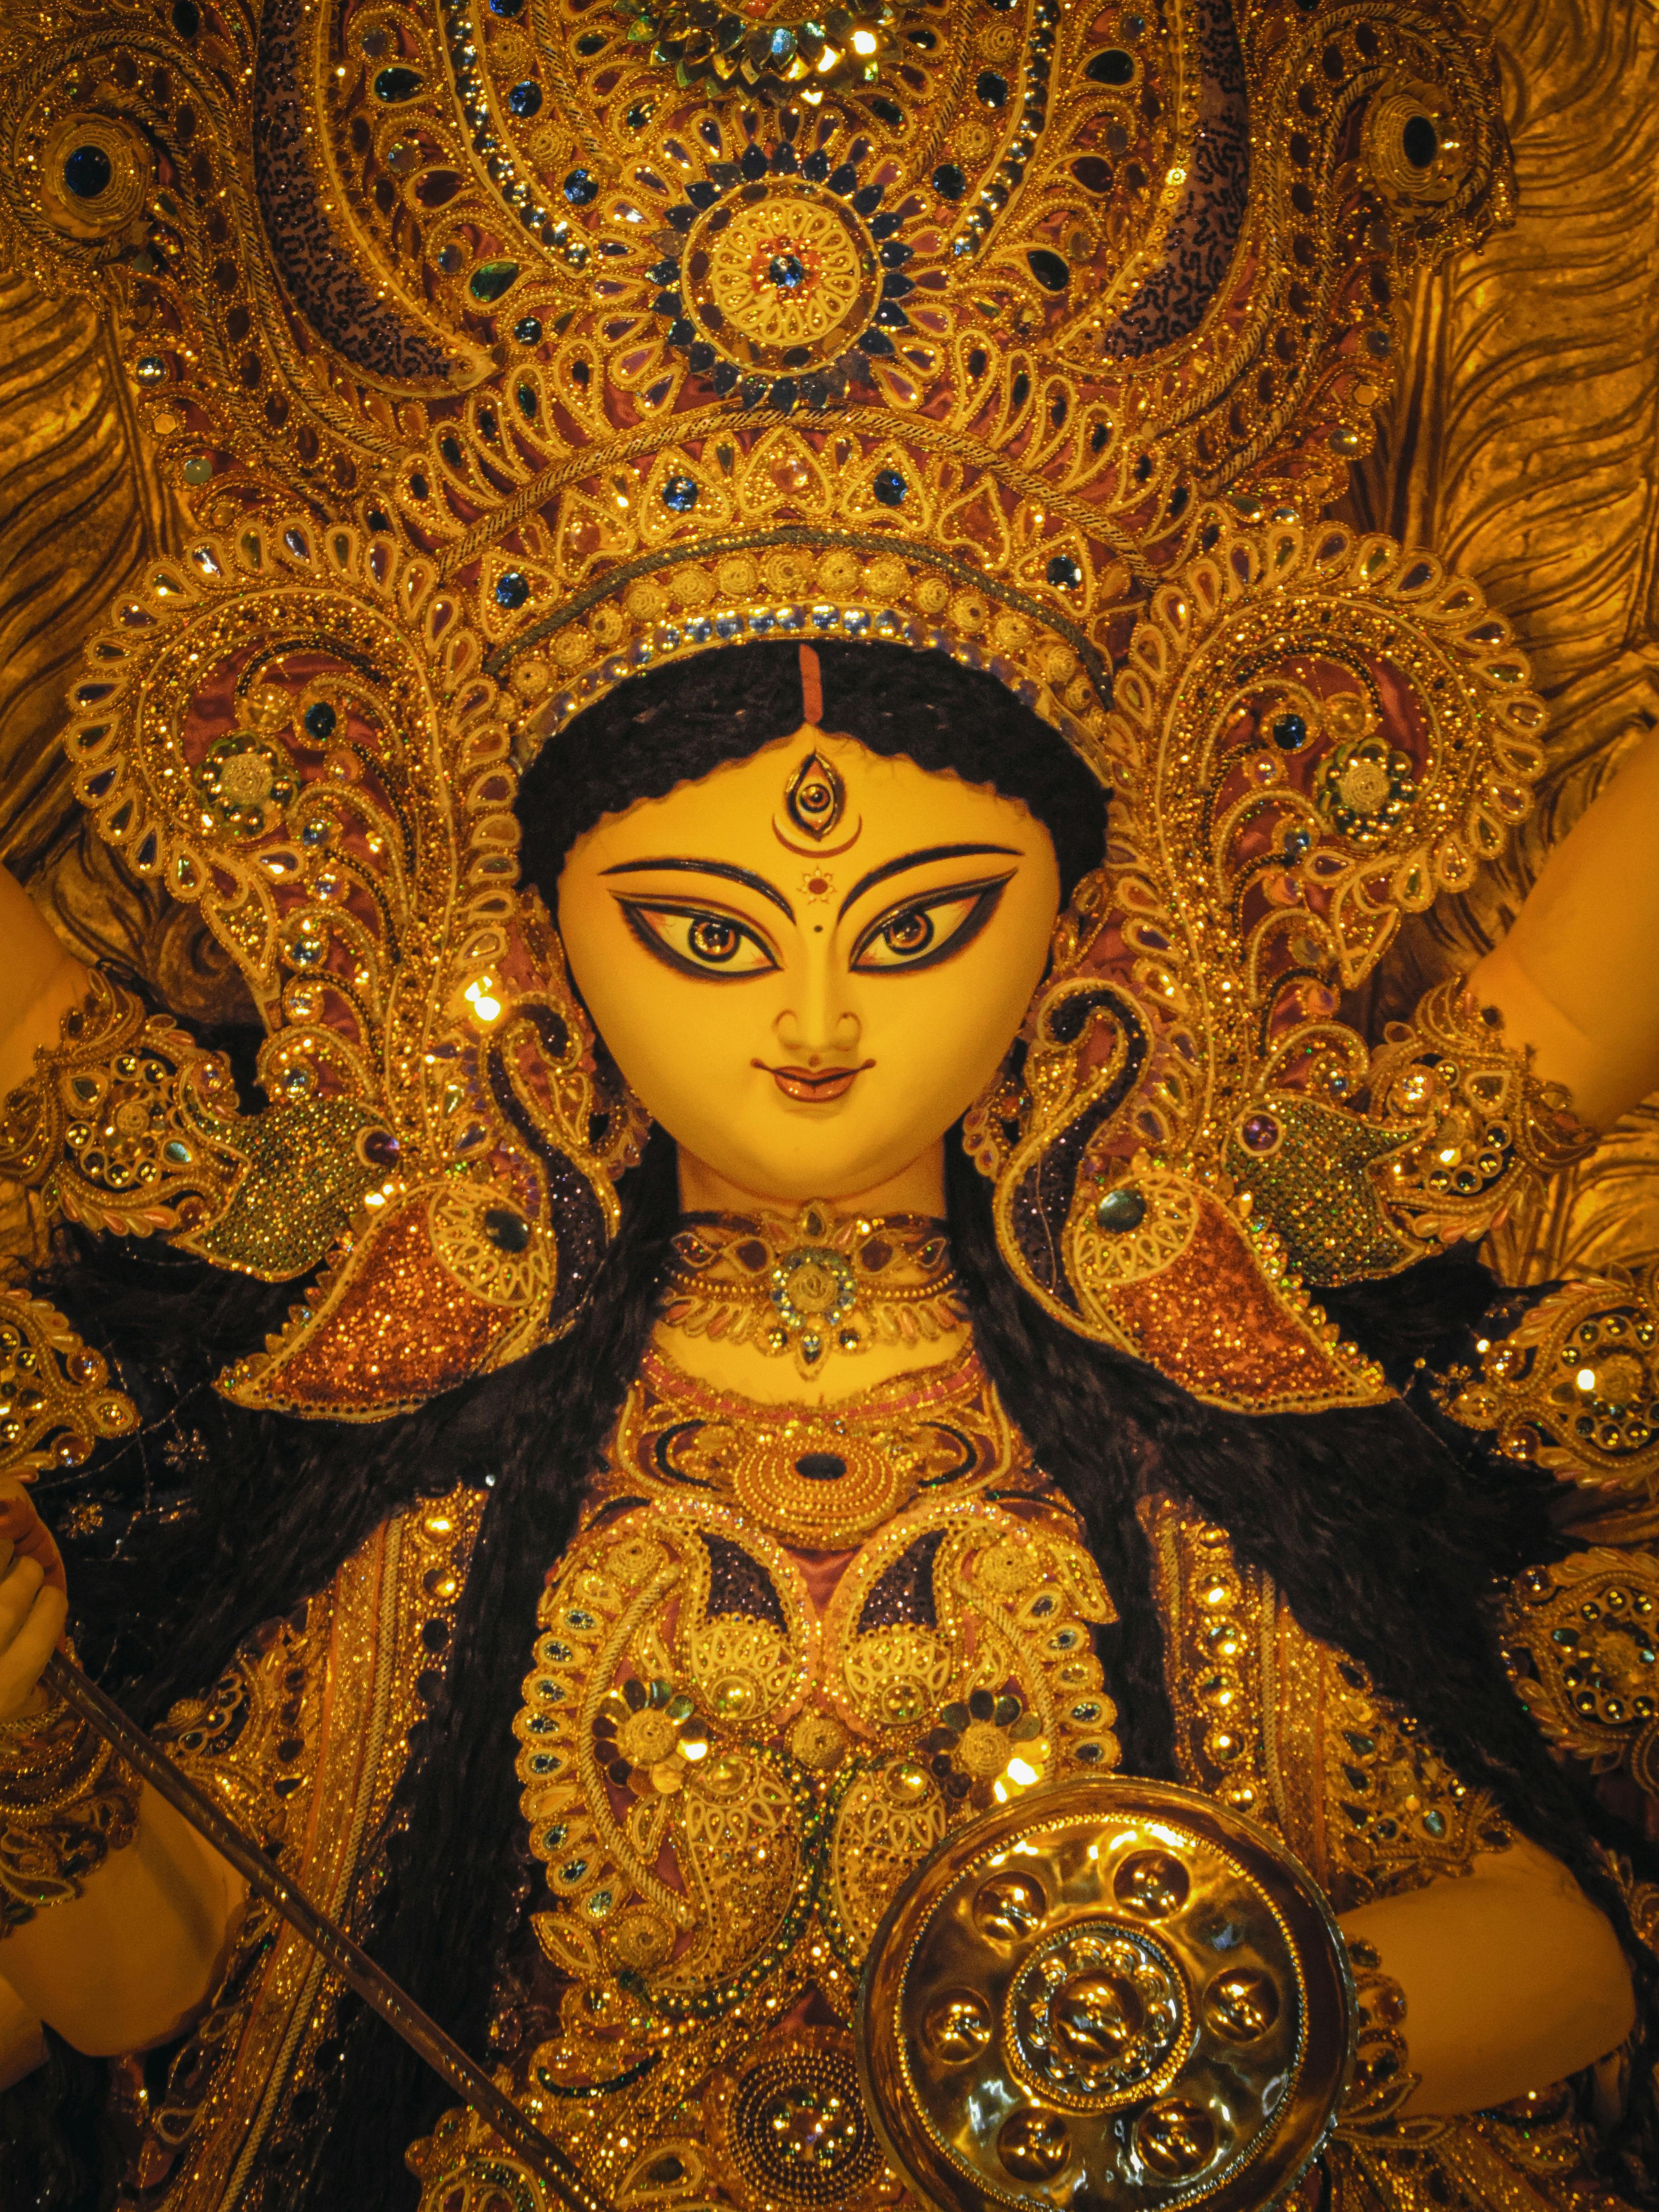 🔥 Kolkata Durga Puja Maa Durga Images | MyGodImages